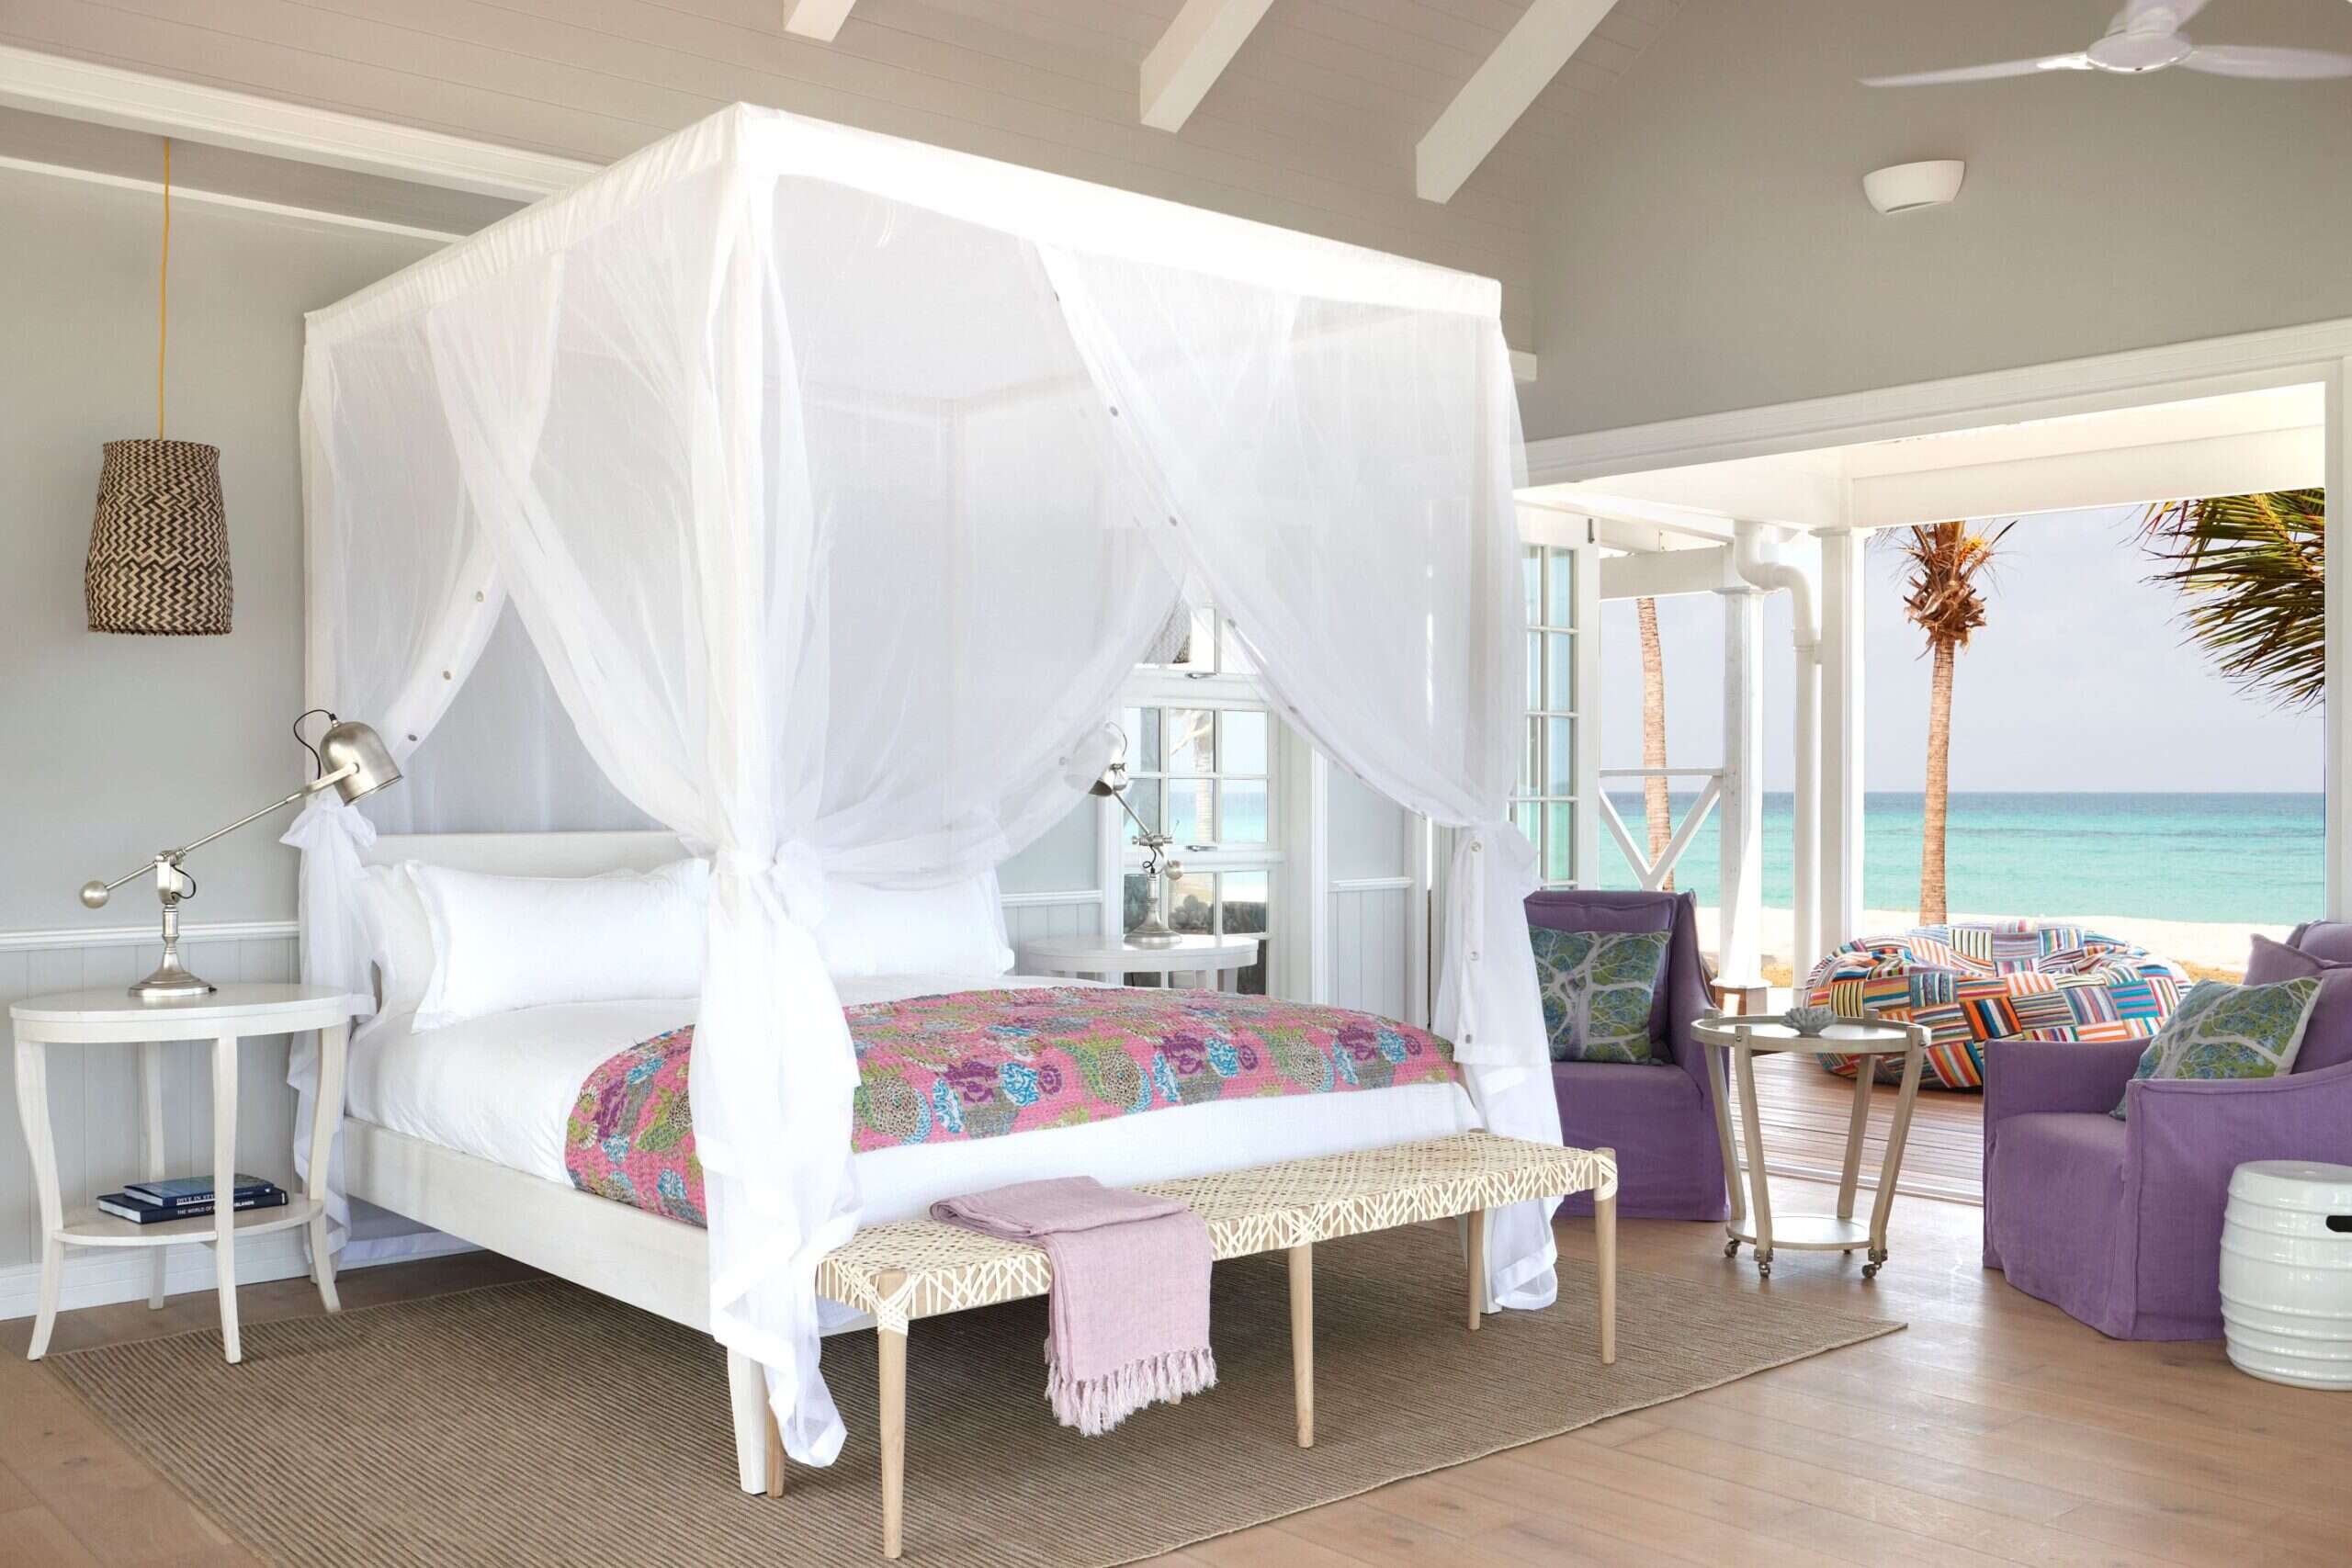 Thanda island bedroom 